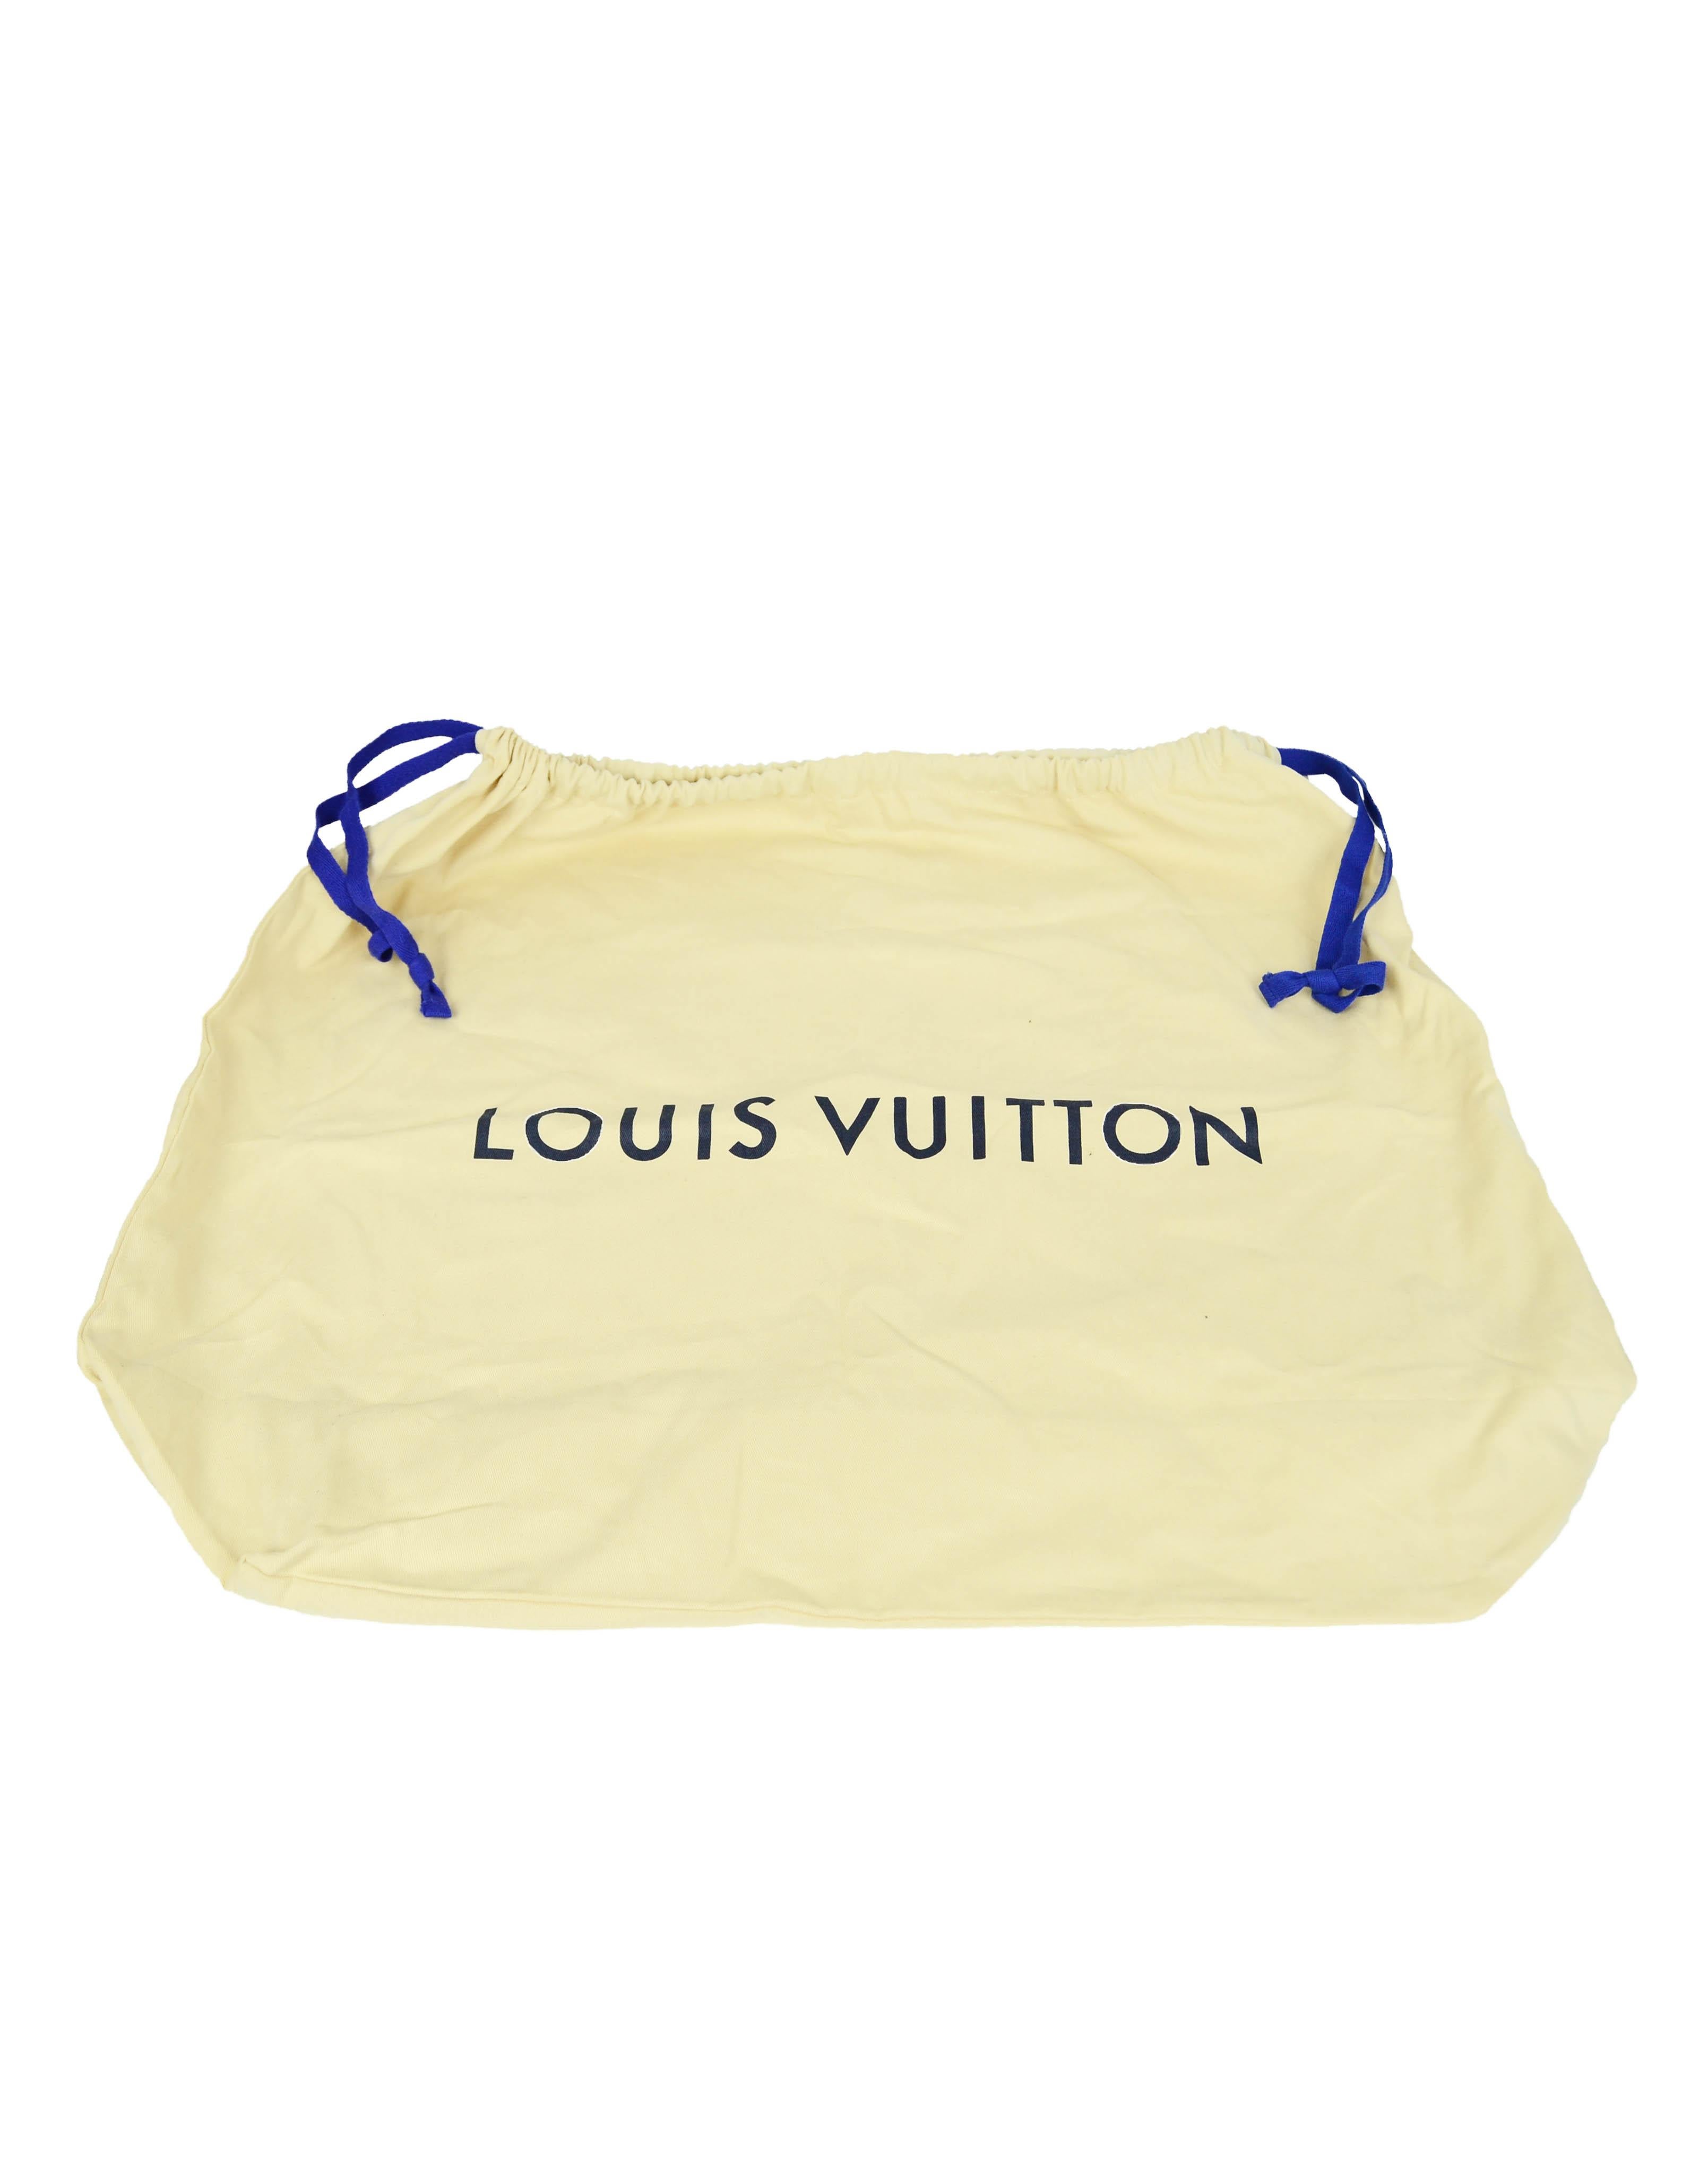 Louis Vuitton Pink Pastel Ltd Edt Palm Beach Monogram Escale Onthego GM Tote Bag 4